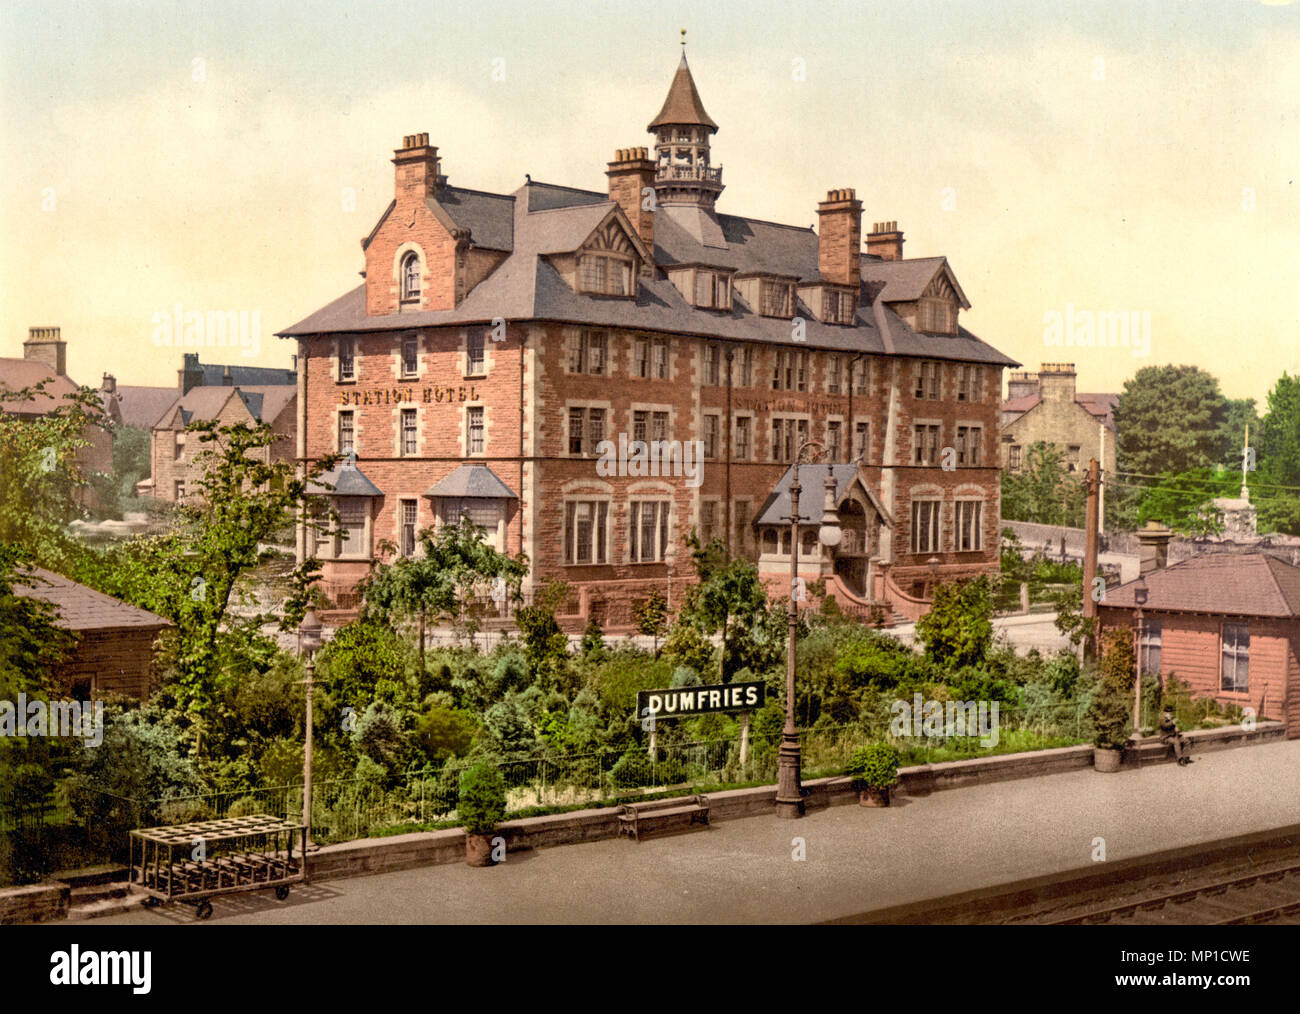 Station Hotel, Dumfries, Scotland, circa 1900 Stock Photo